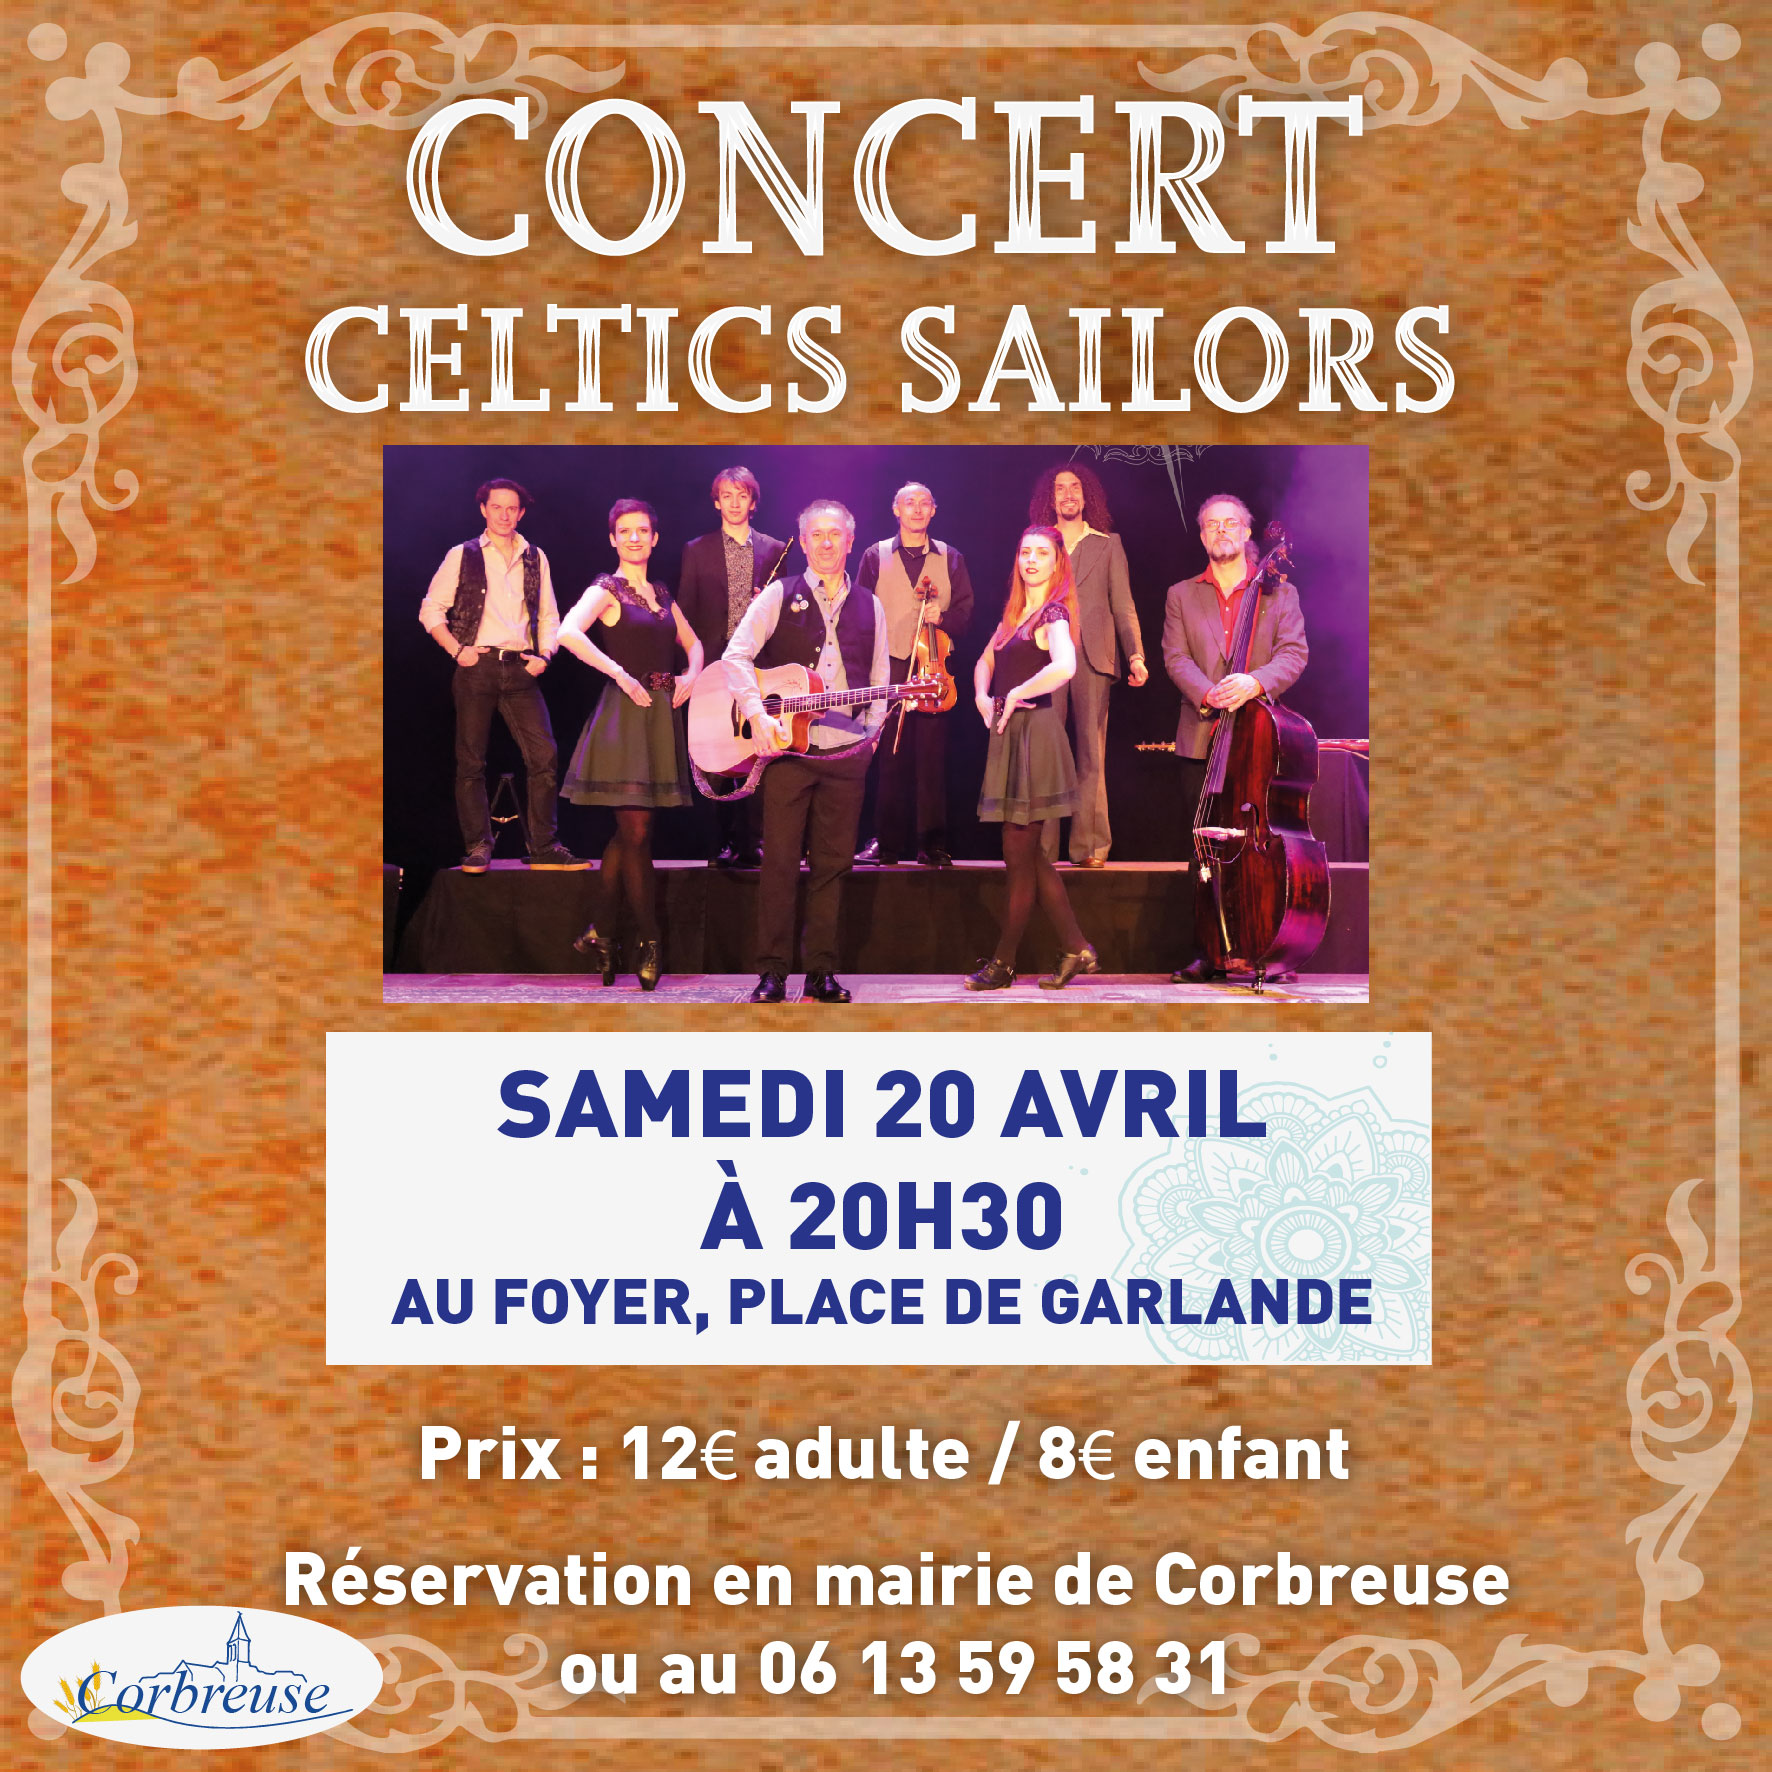 Concert Celtics Sailors